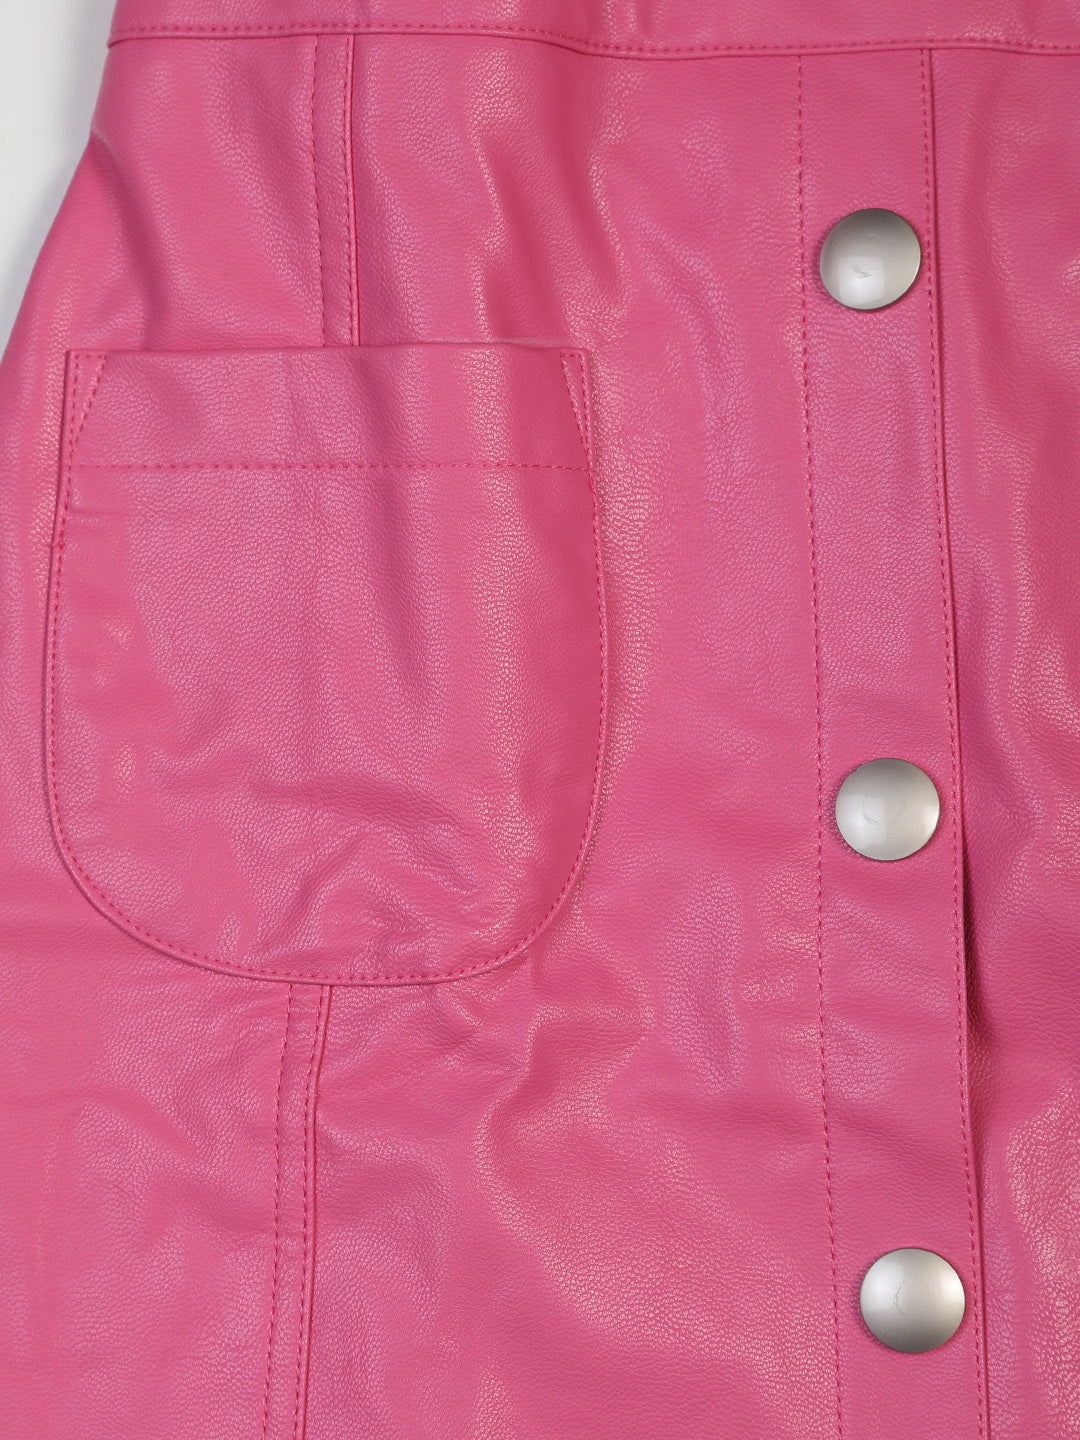 Nins Moda Girls Solid Skirt- Pink